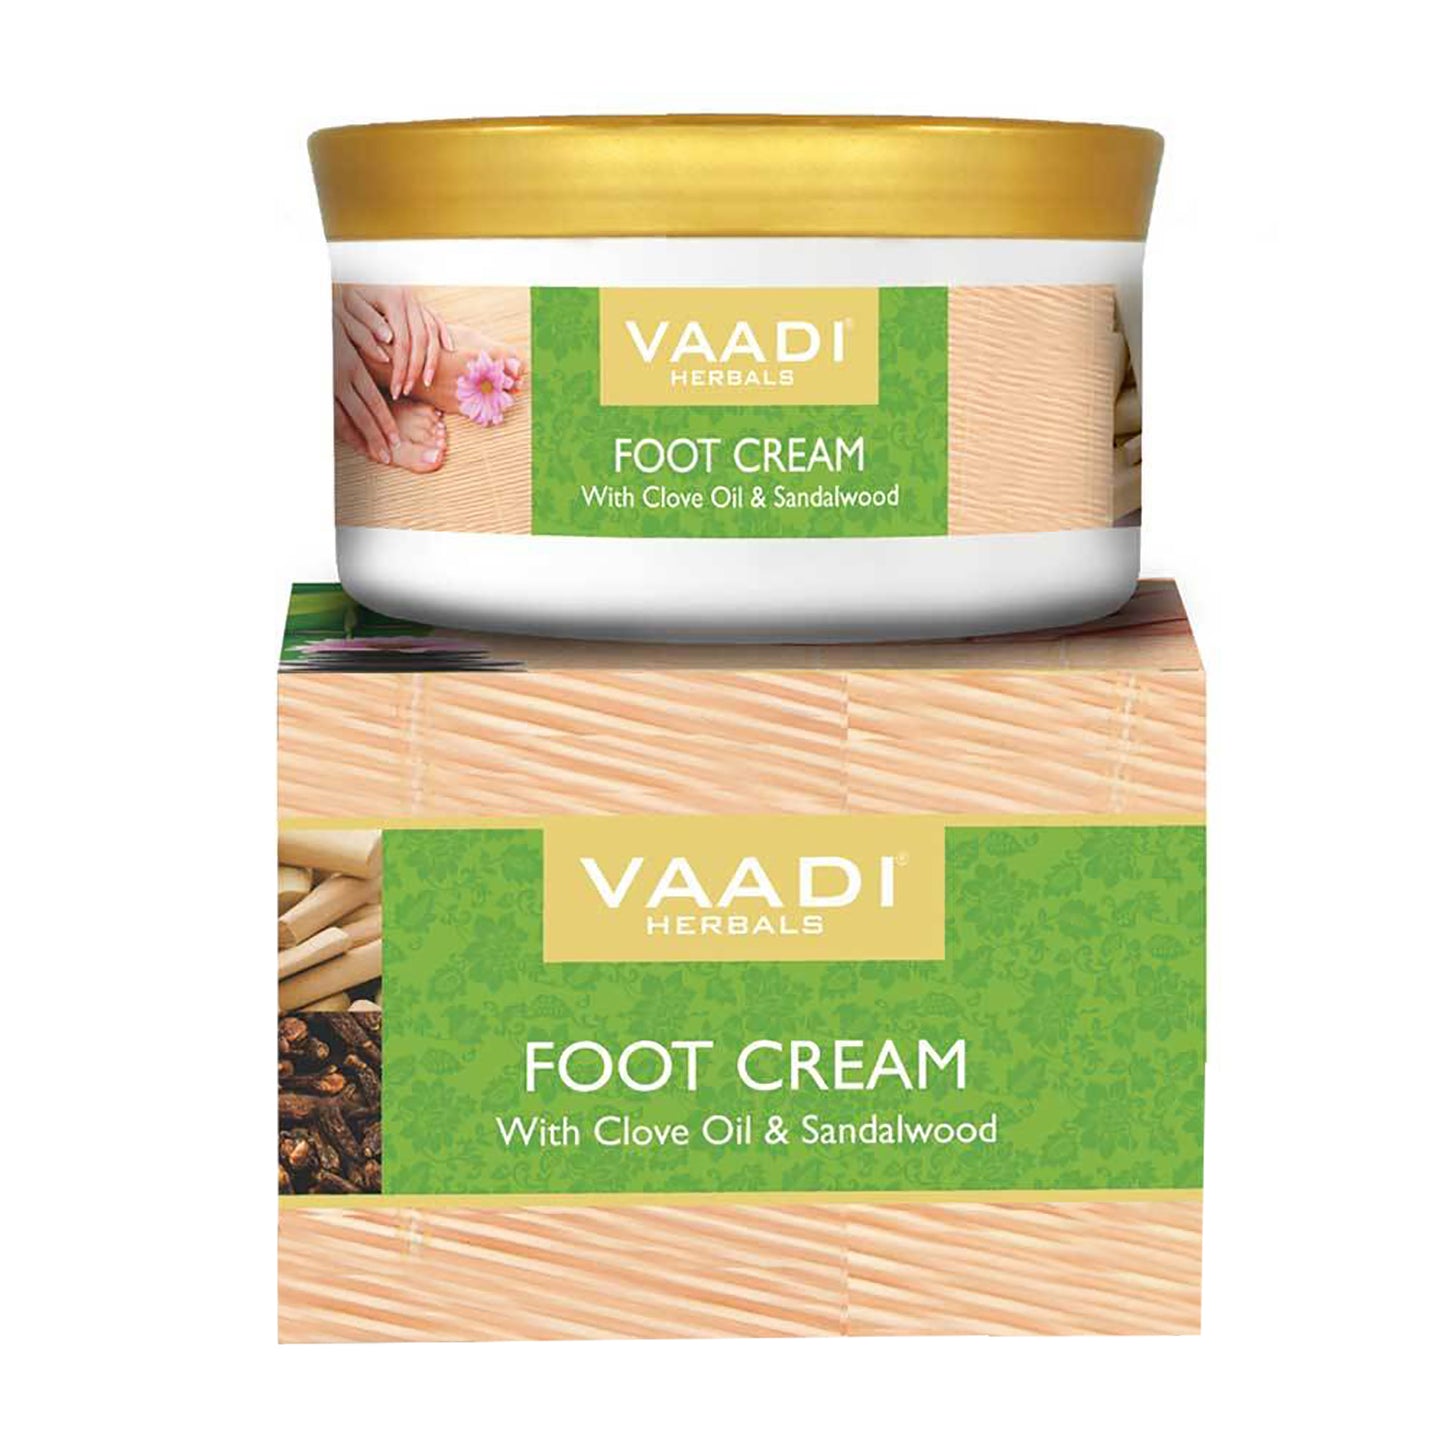 Organic Foot Cream with Clove & Sandalwood Oil - Softens Dry & Cracked Feet - Deep Moisturises (150 gms / 5.3 oz)